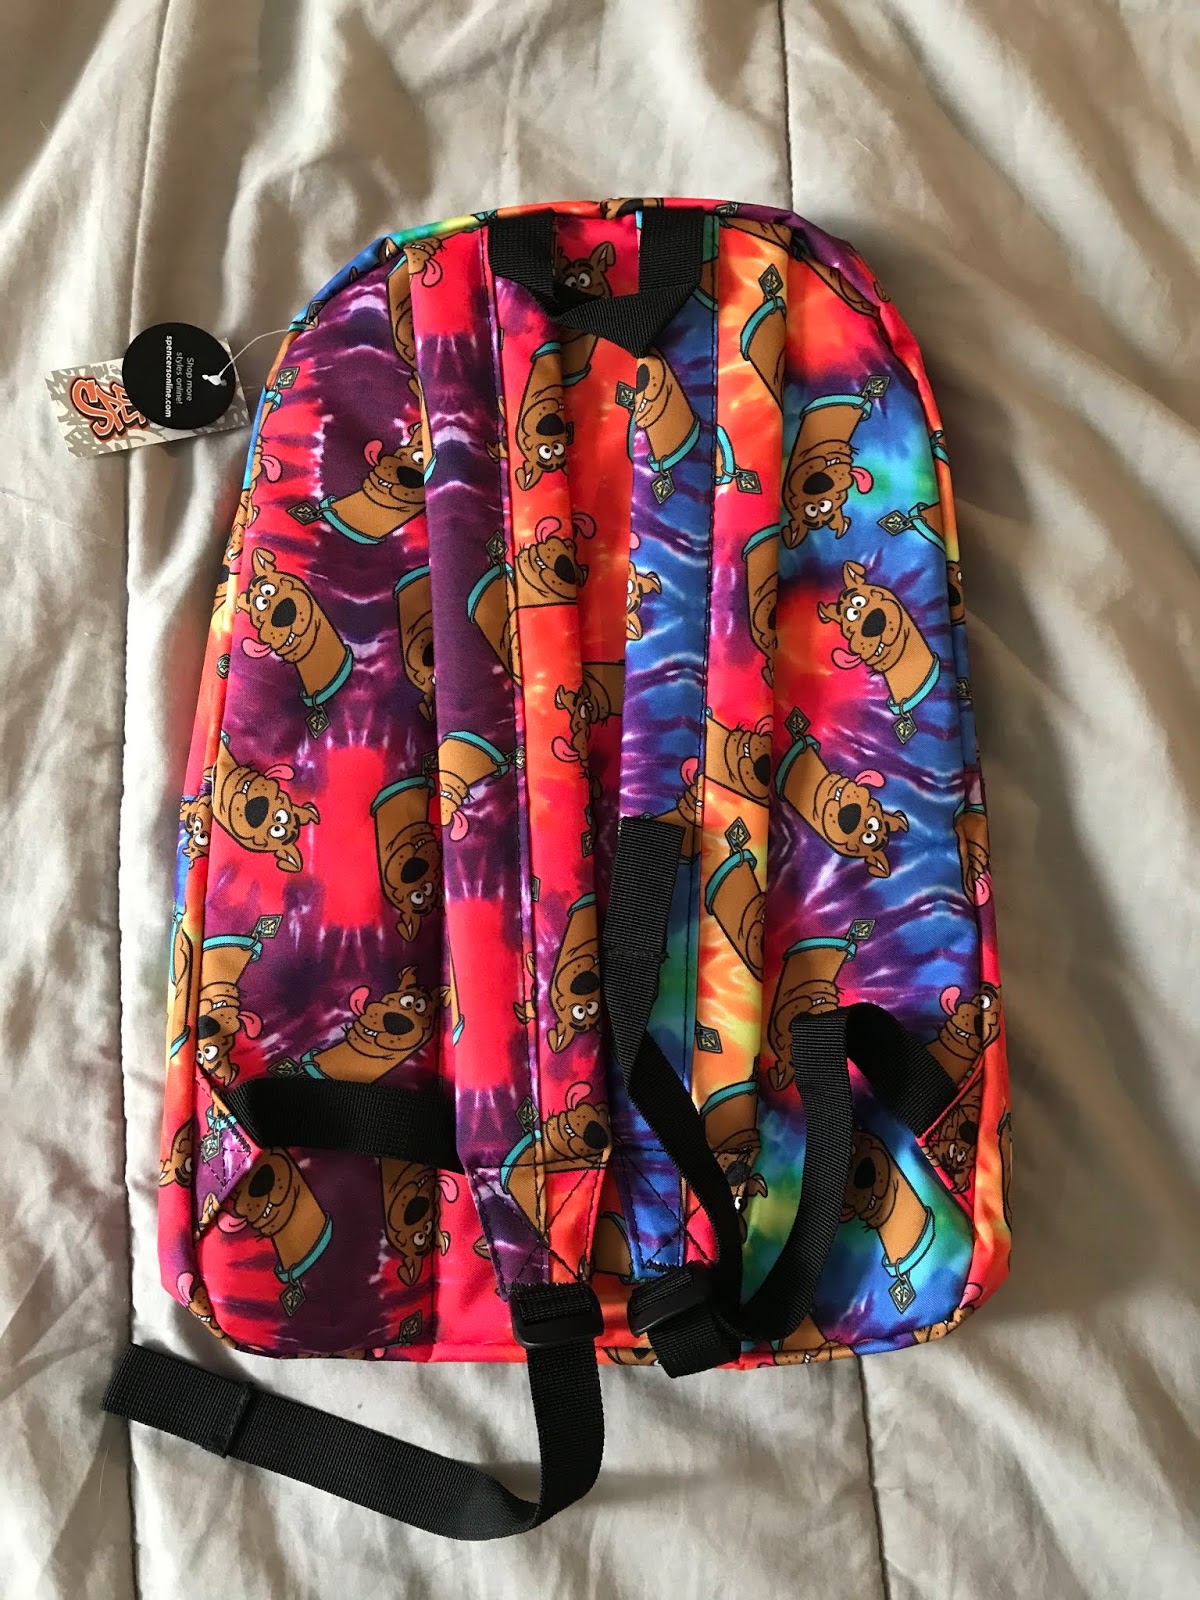 ScoobyAddict's Blog: My Scooby Stuff - Item 409 - Tie Dye Scooby Backpack